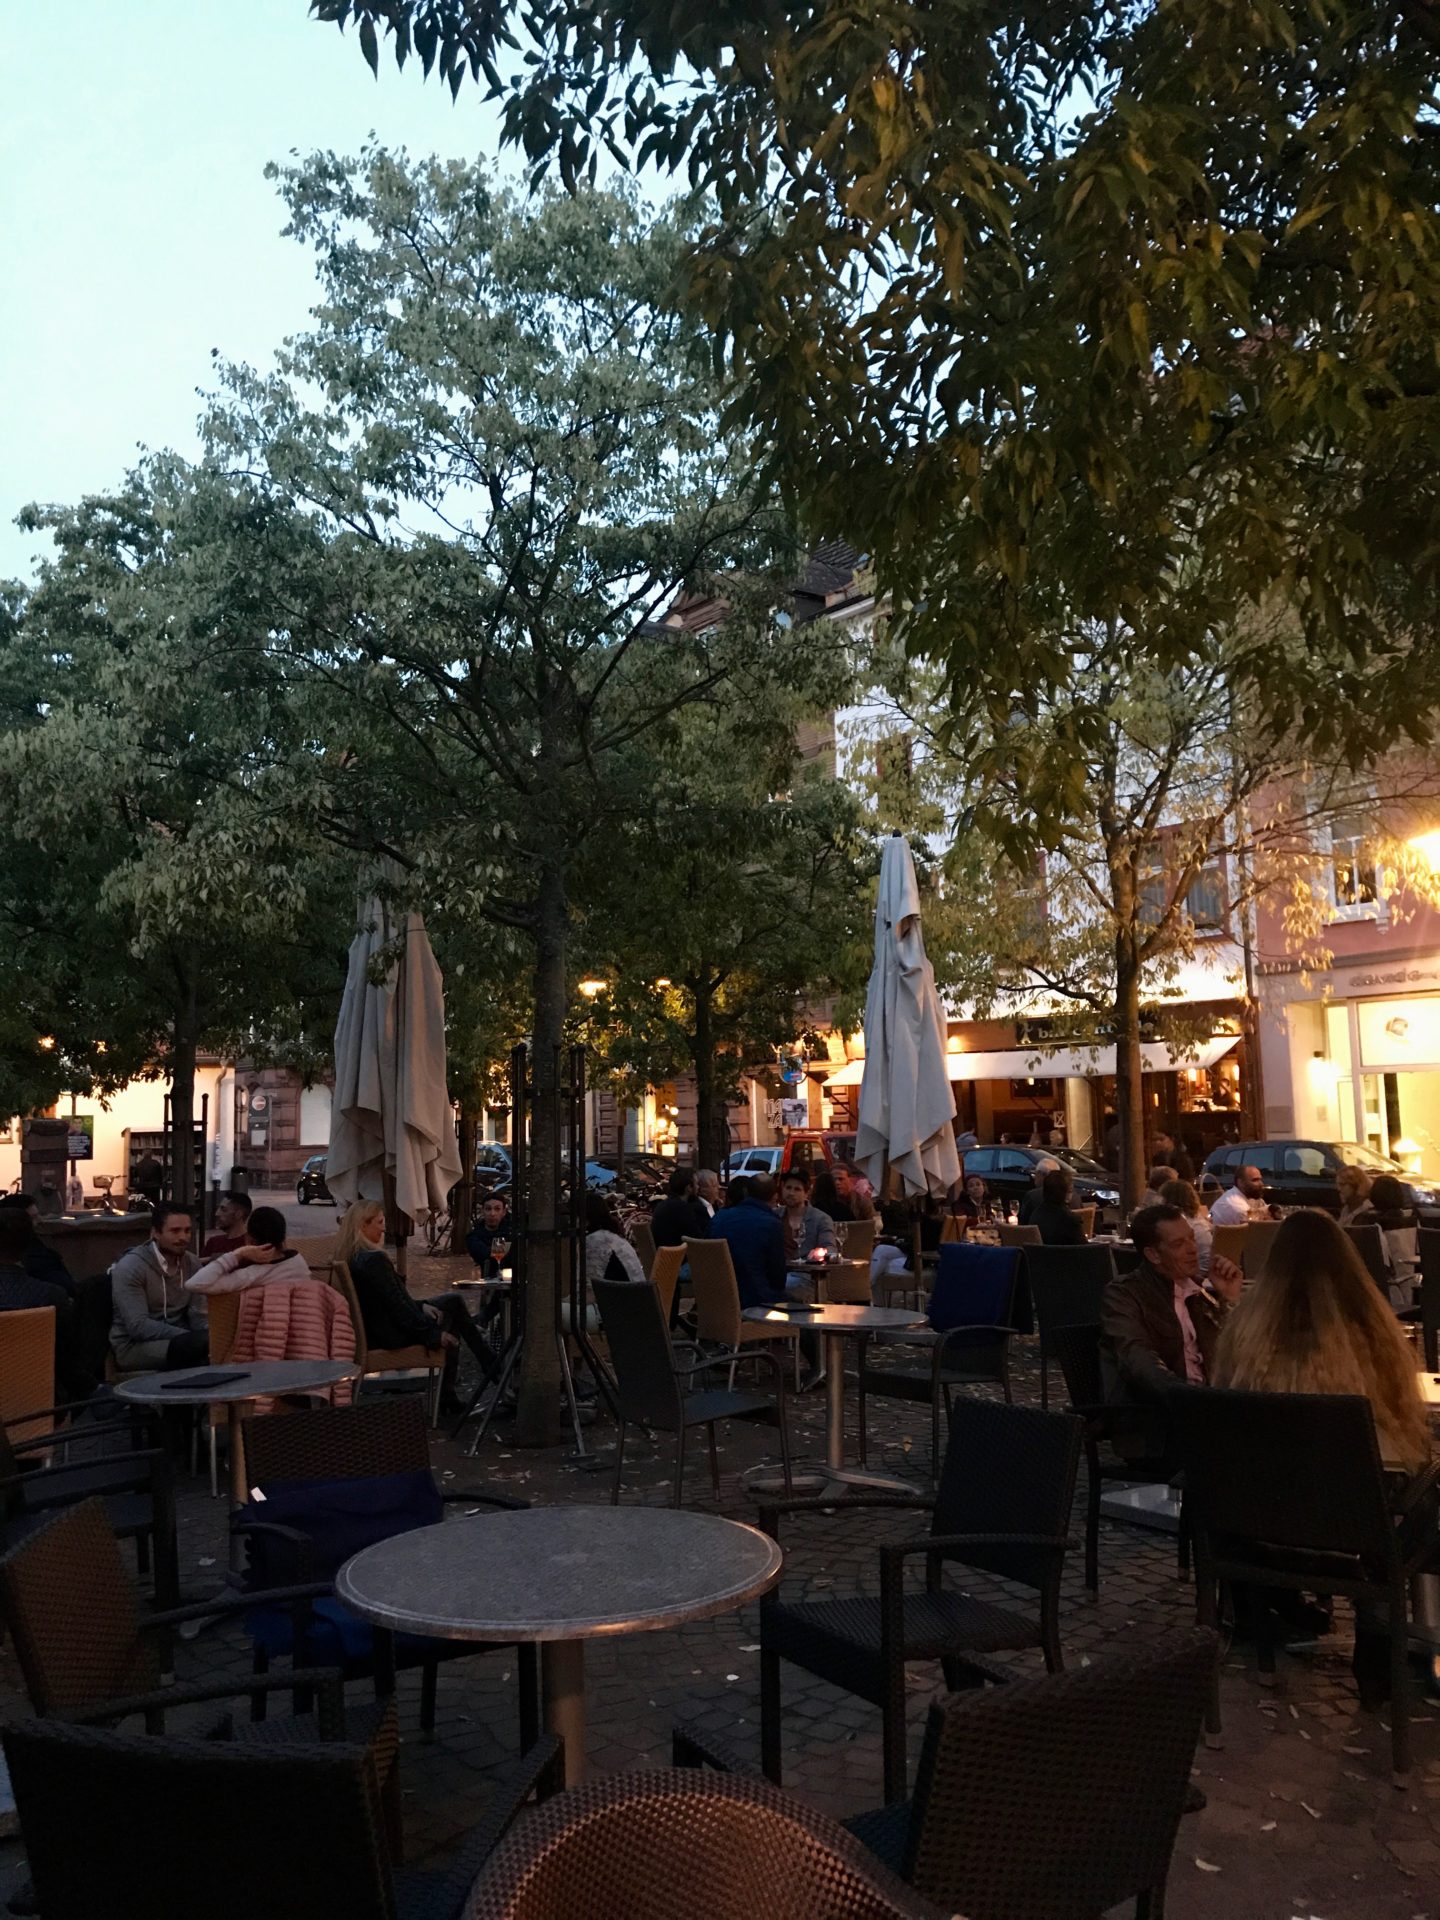 The lovely Neuenheim Marktplatz on a spring evening.